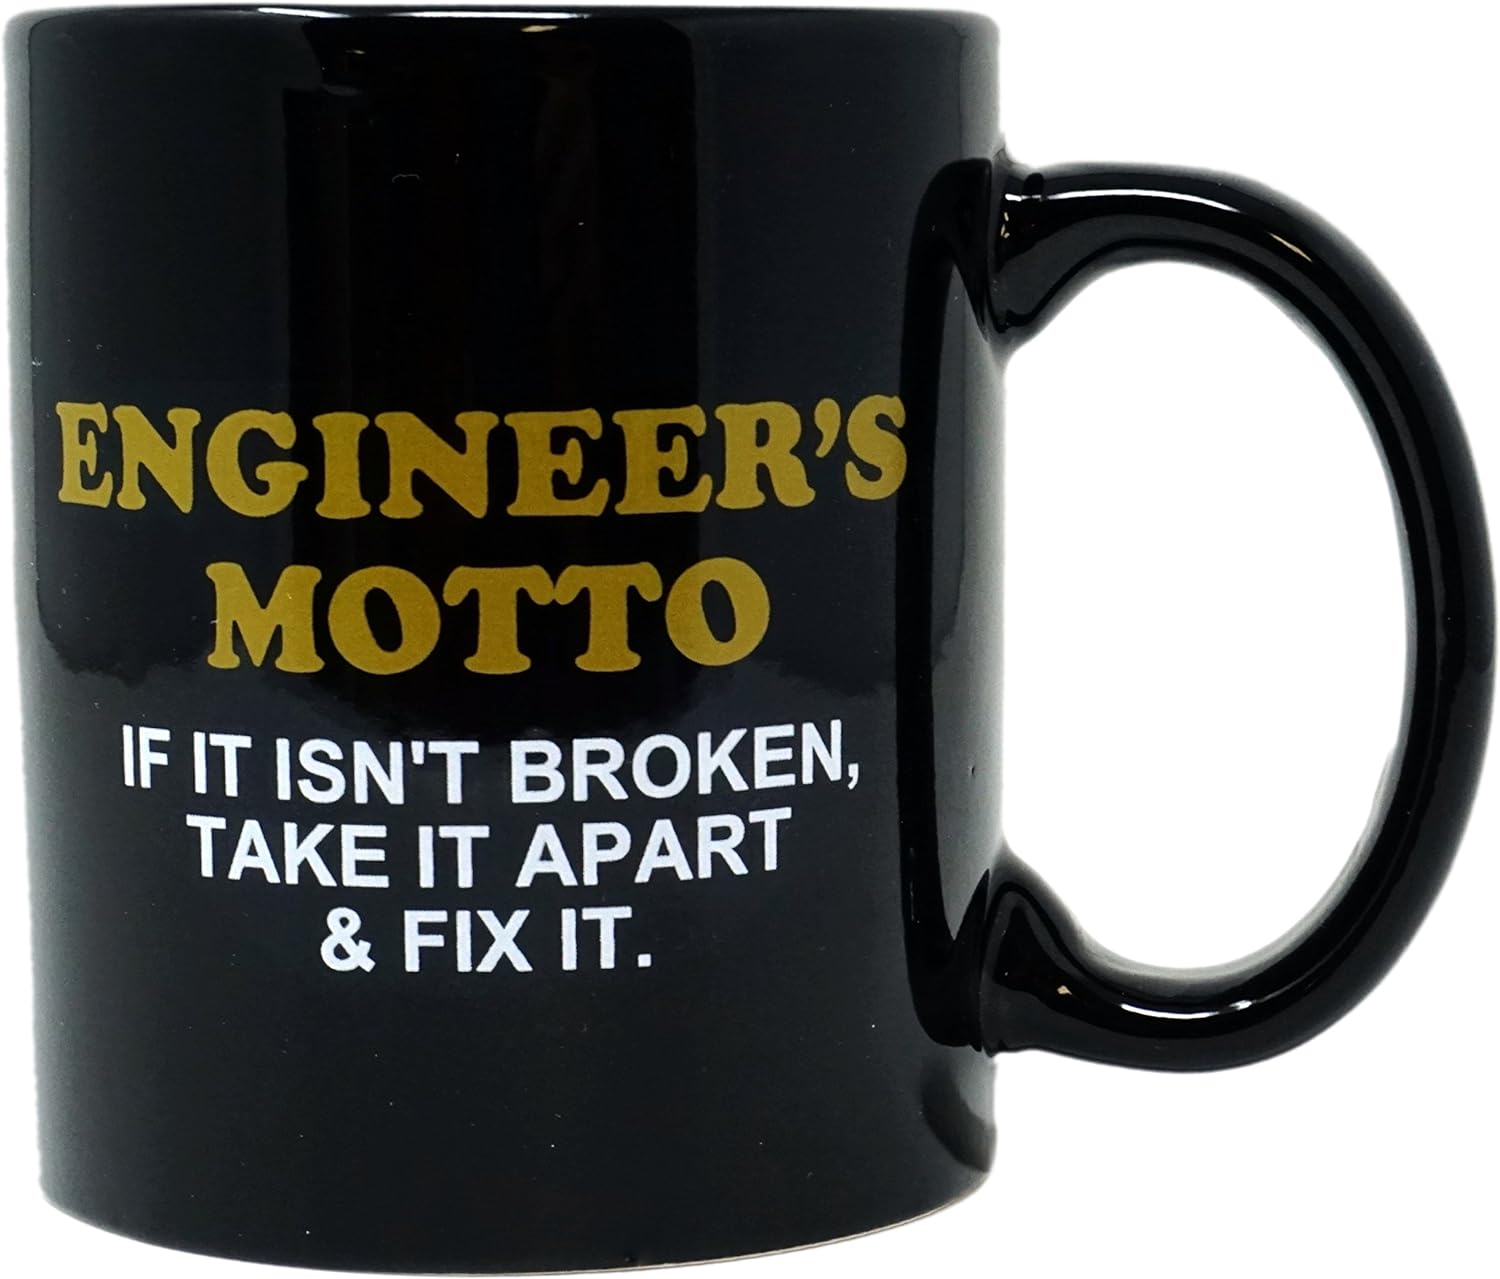 Funny Guy Mugs Funny Engineering Coffee MugsÉ